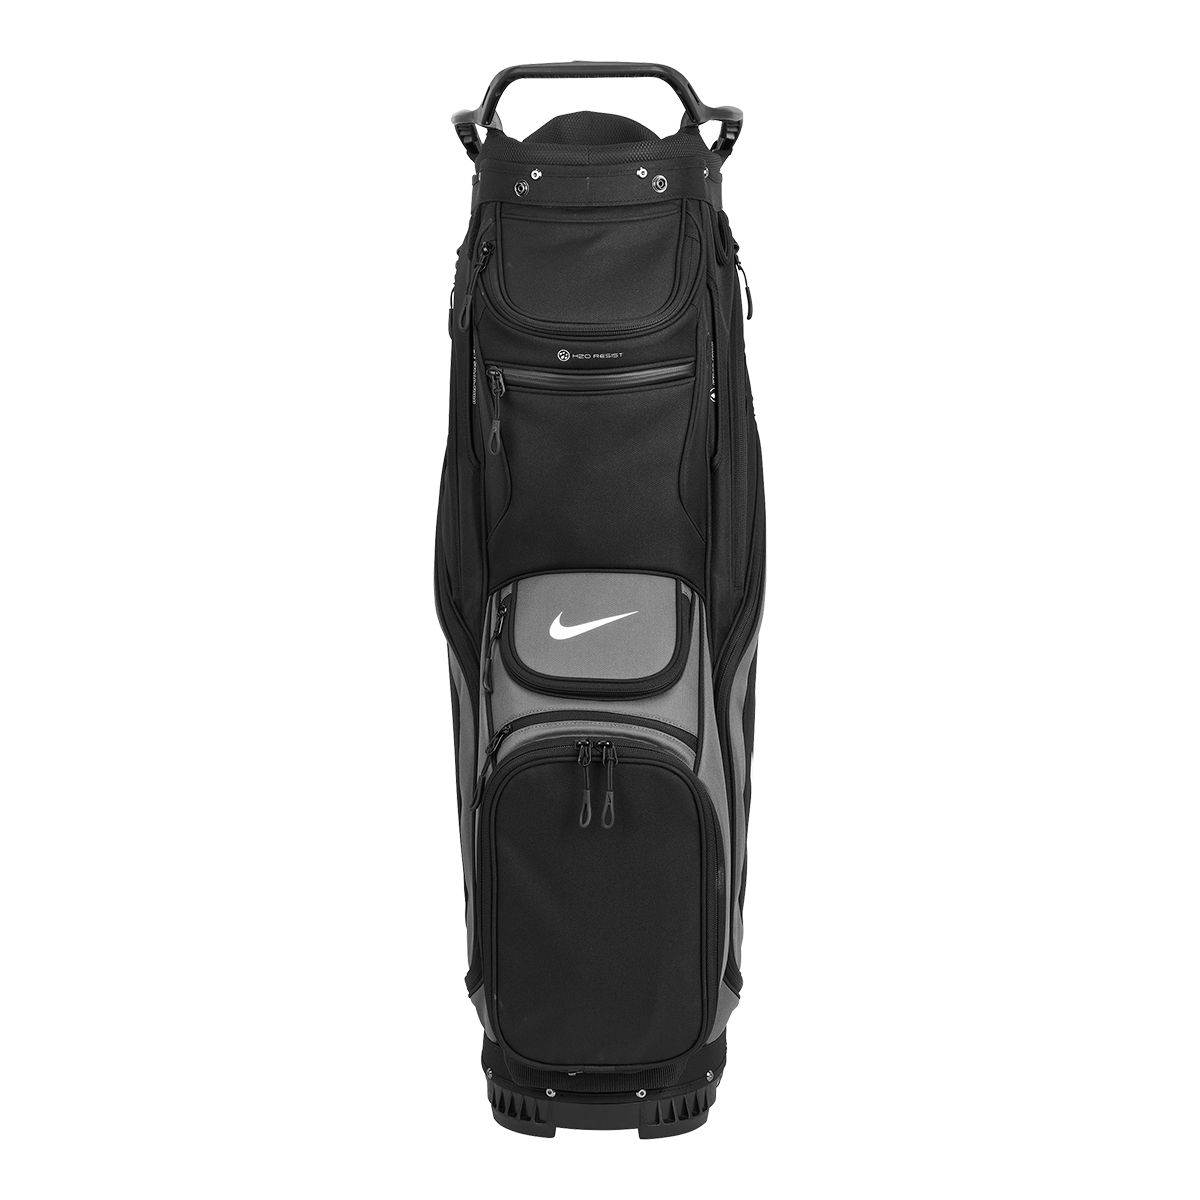 Image of Nike Golf Performance Cart Bag